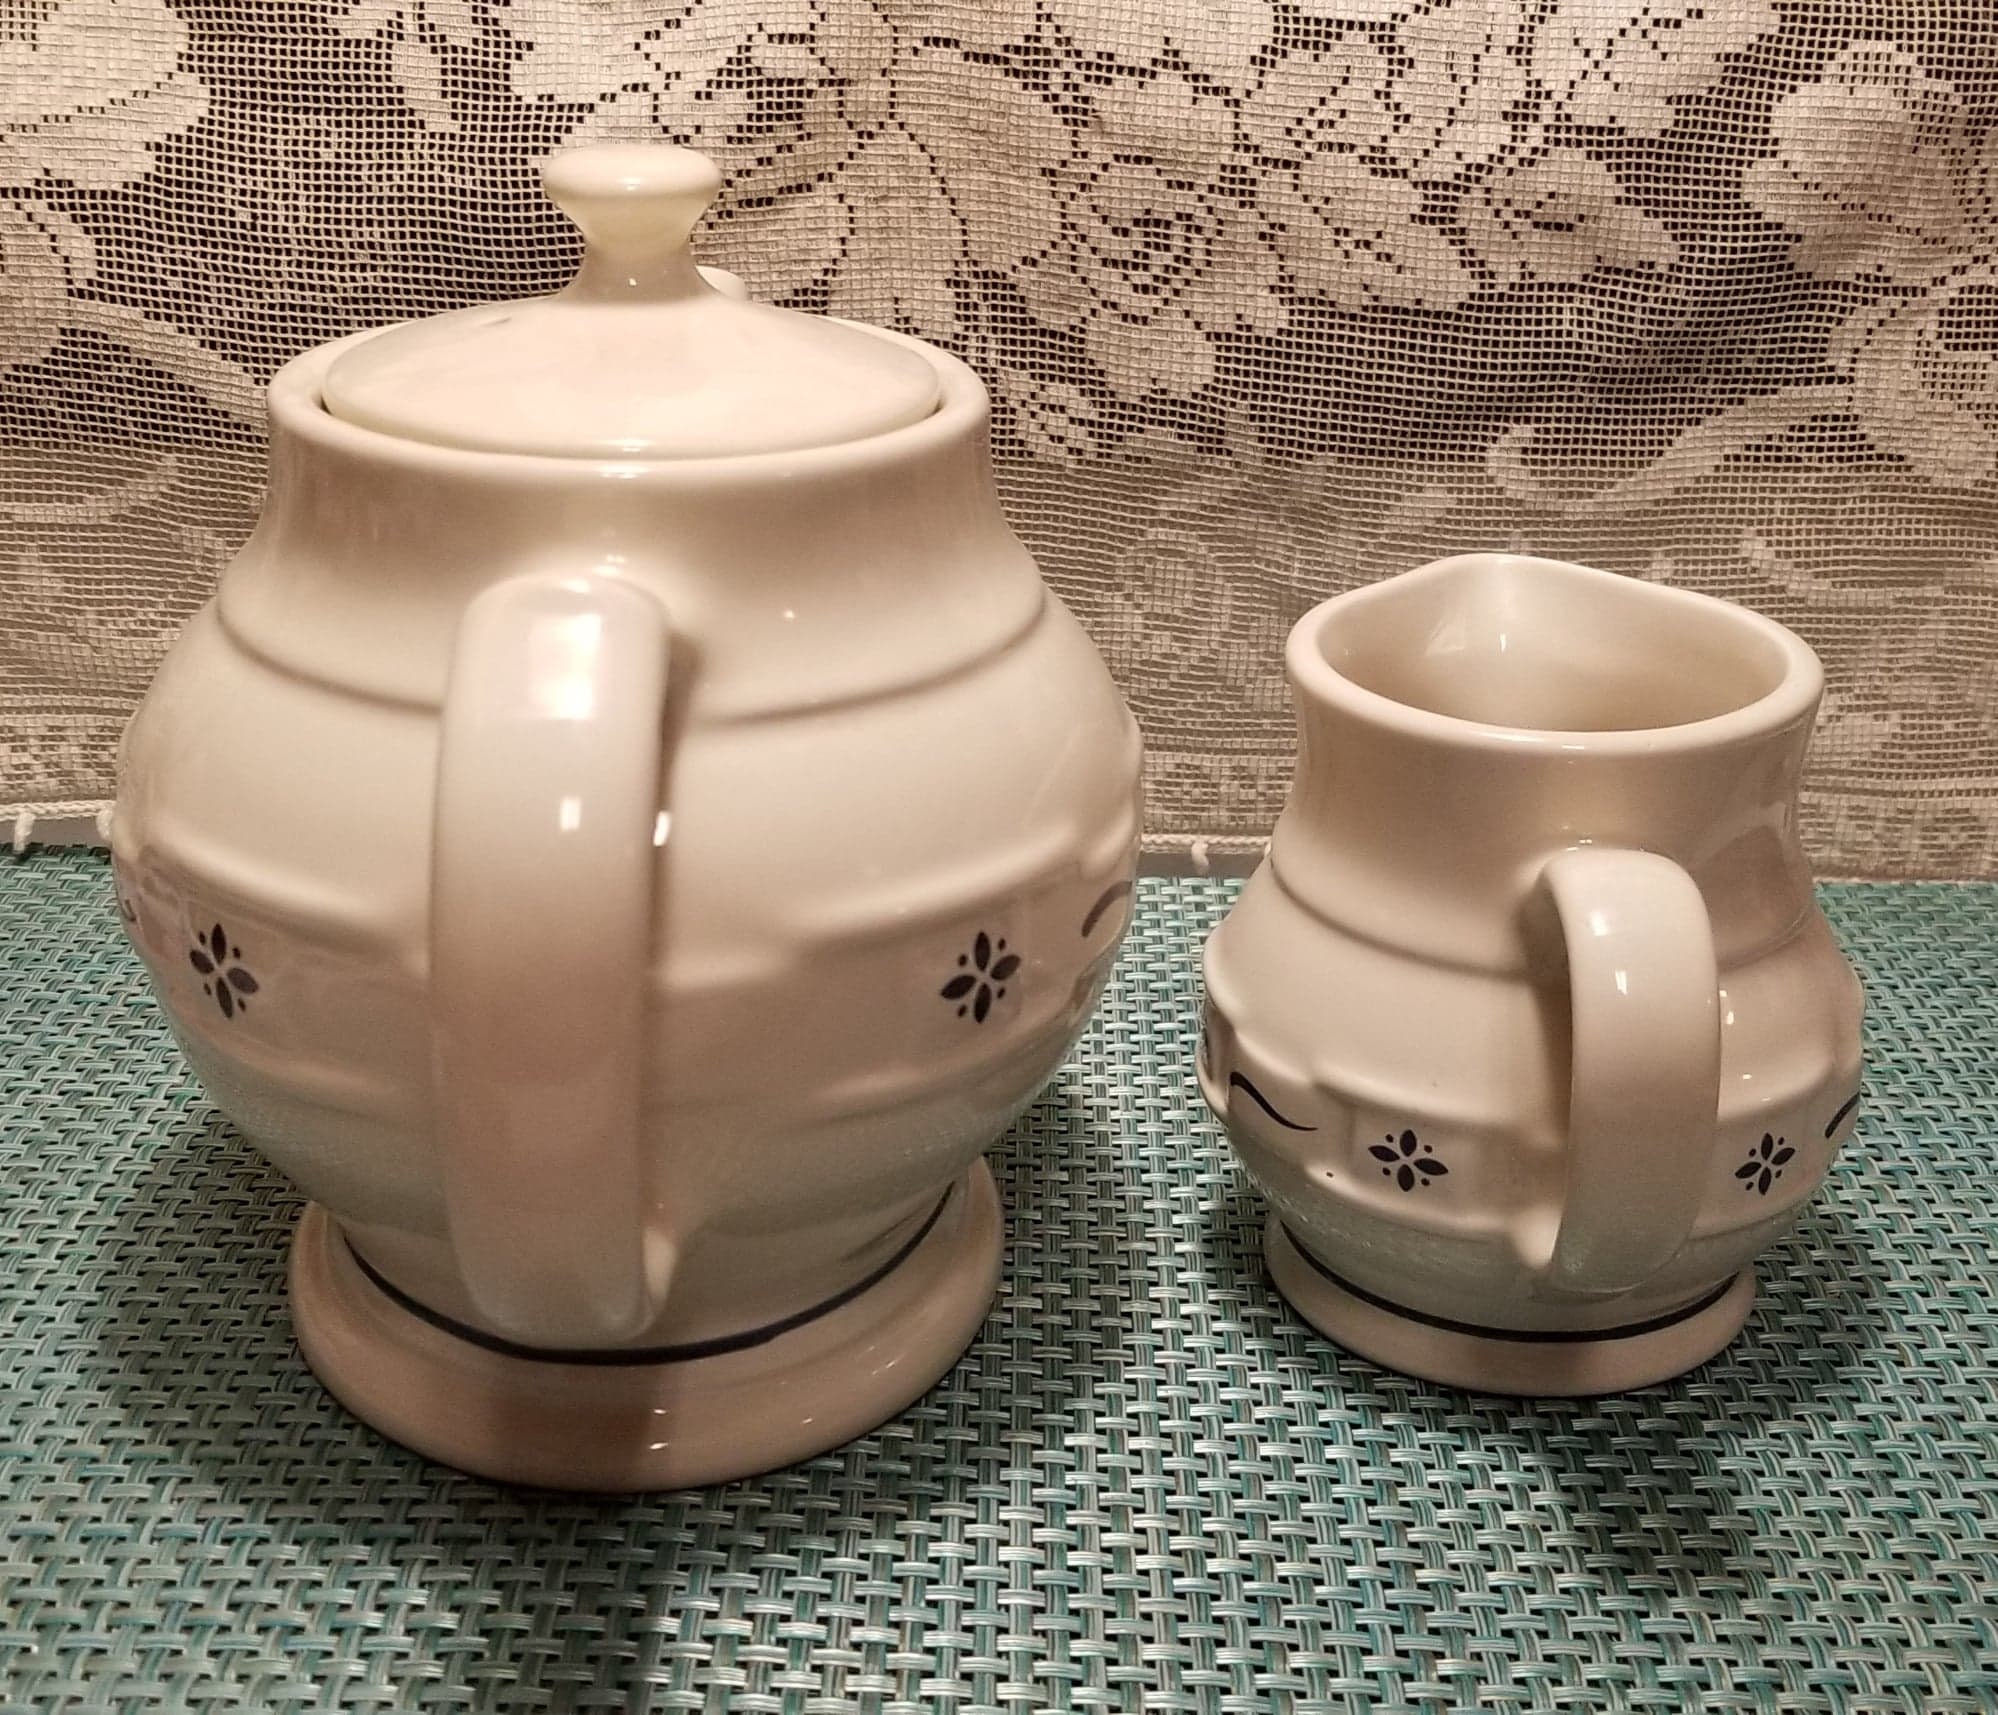 Longaberger Teapot Blue Woven Traditions Tea Pottery 